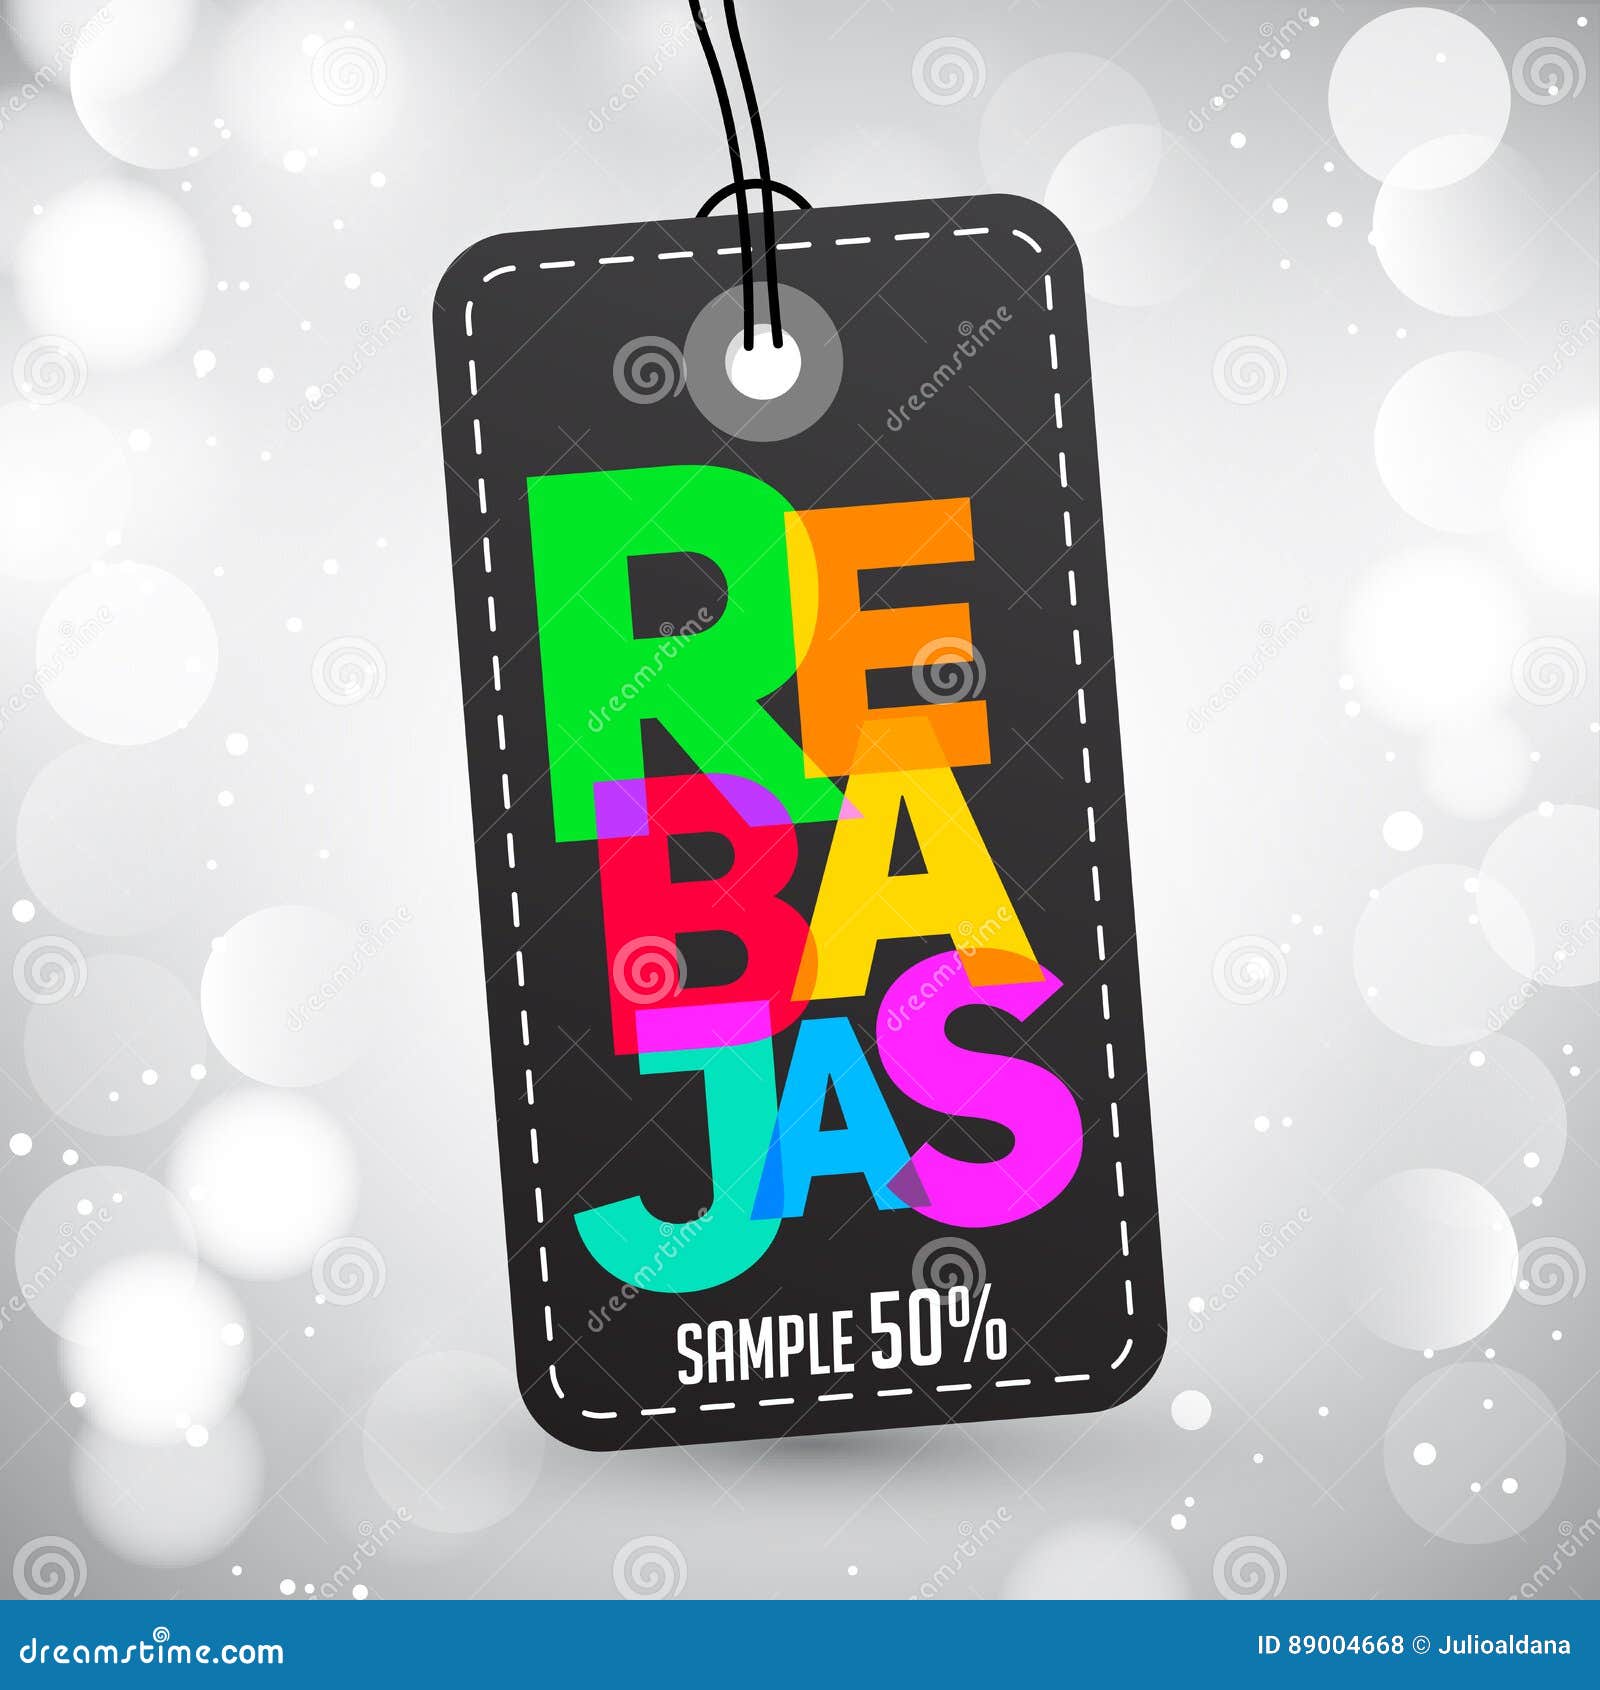 rebajas - discounts spanish text, sales  colorful label tag 